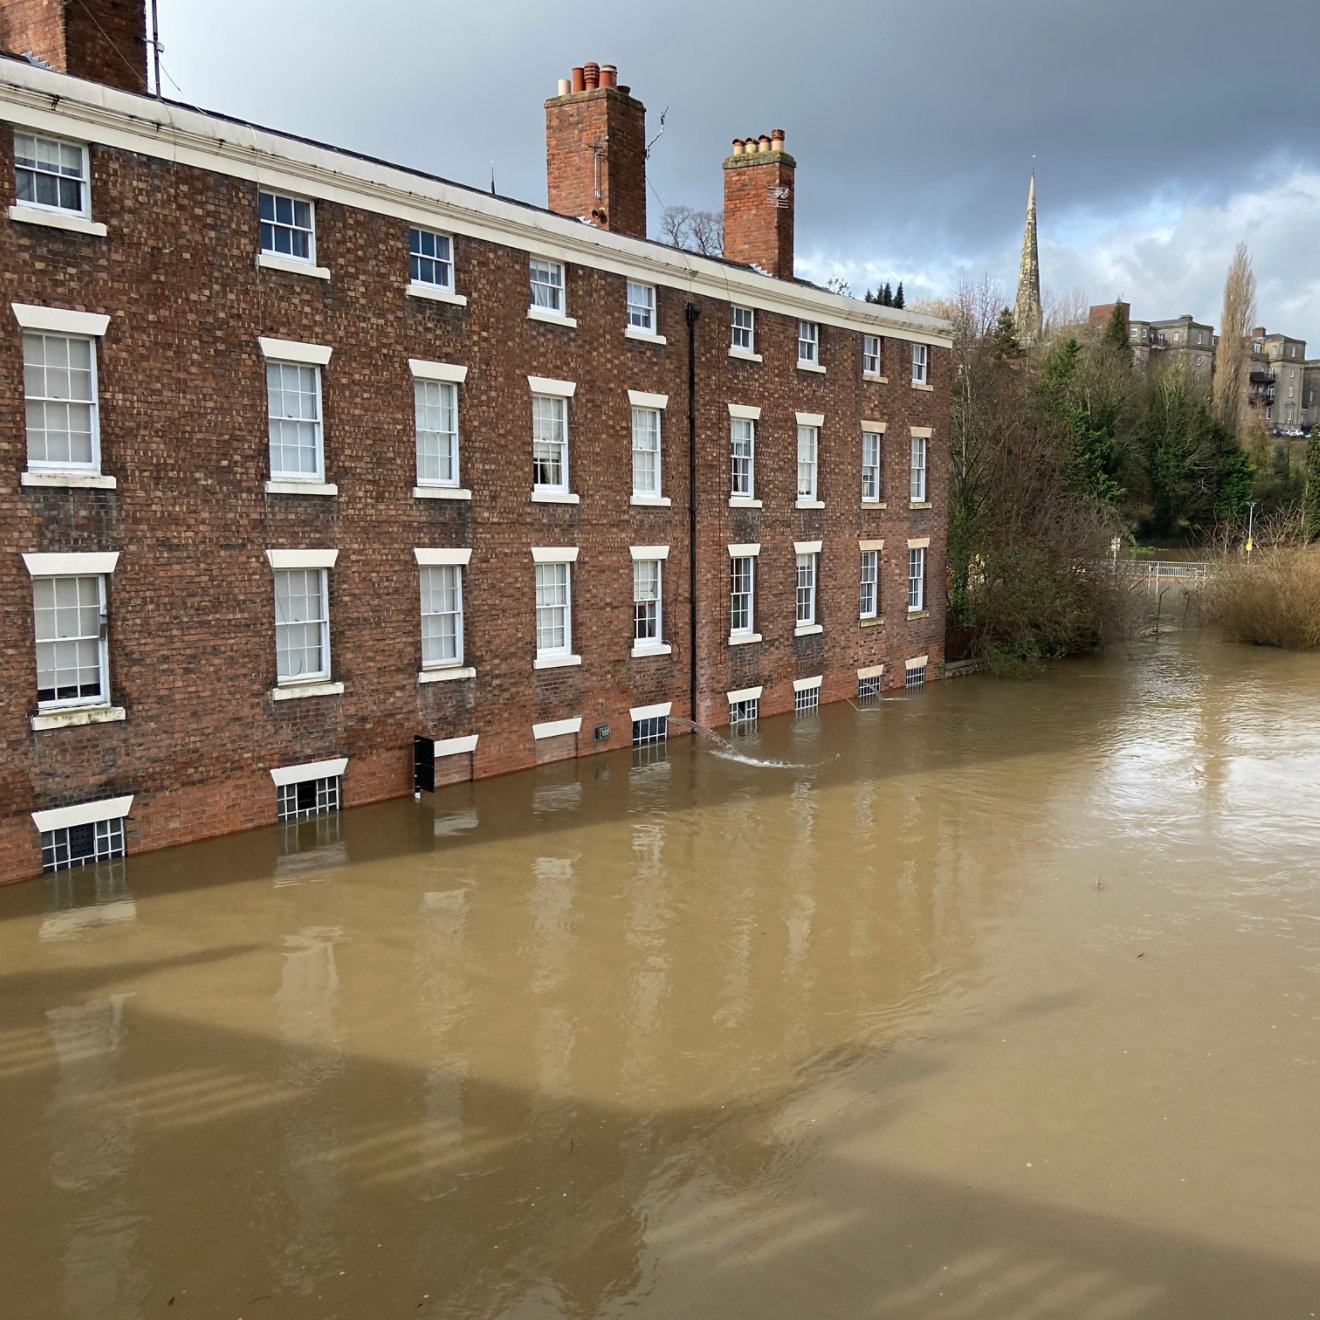 Flooded building on River Severn flooding in Shrewsbury, Shropshire, UK